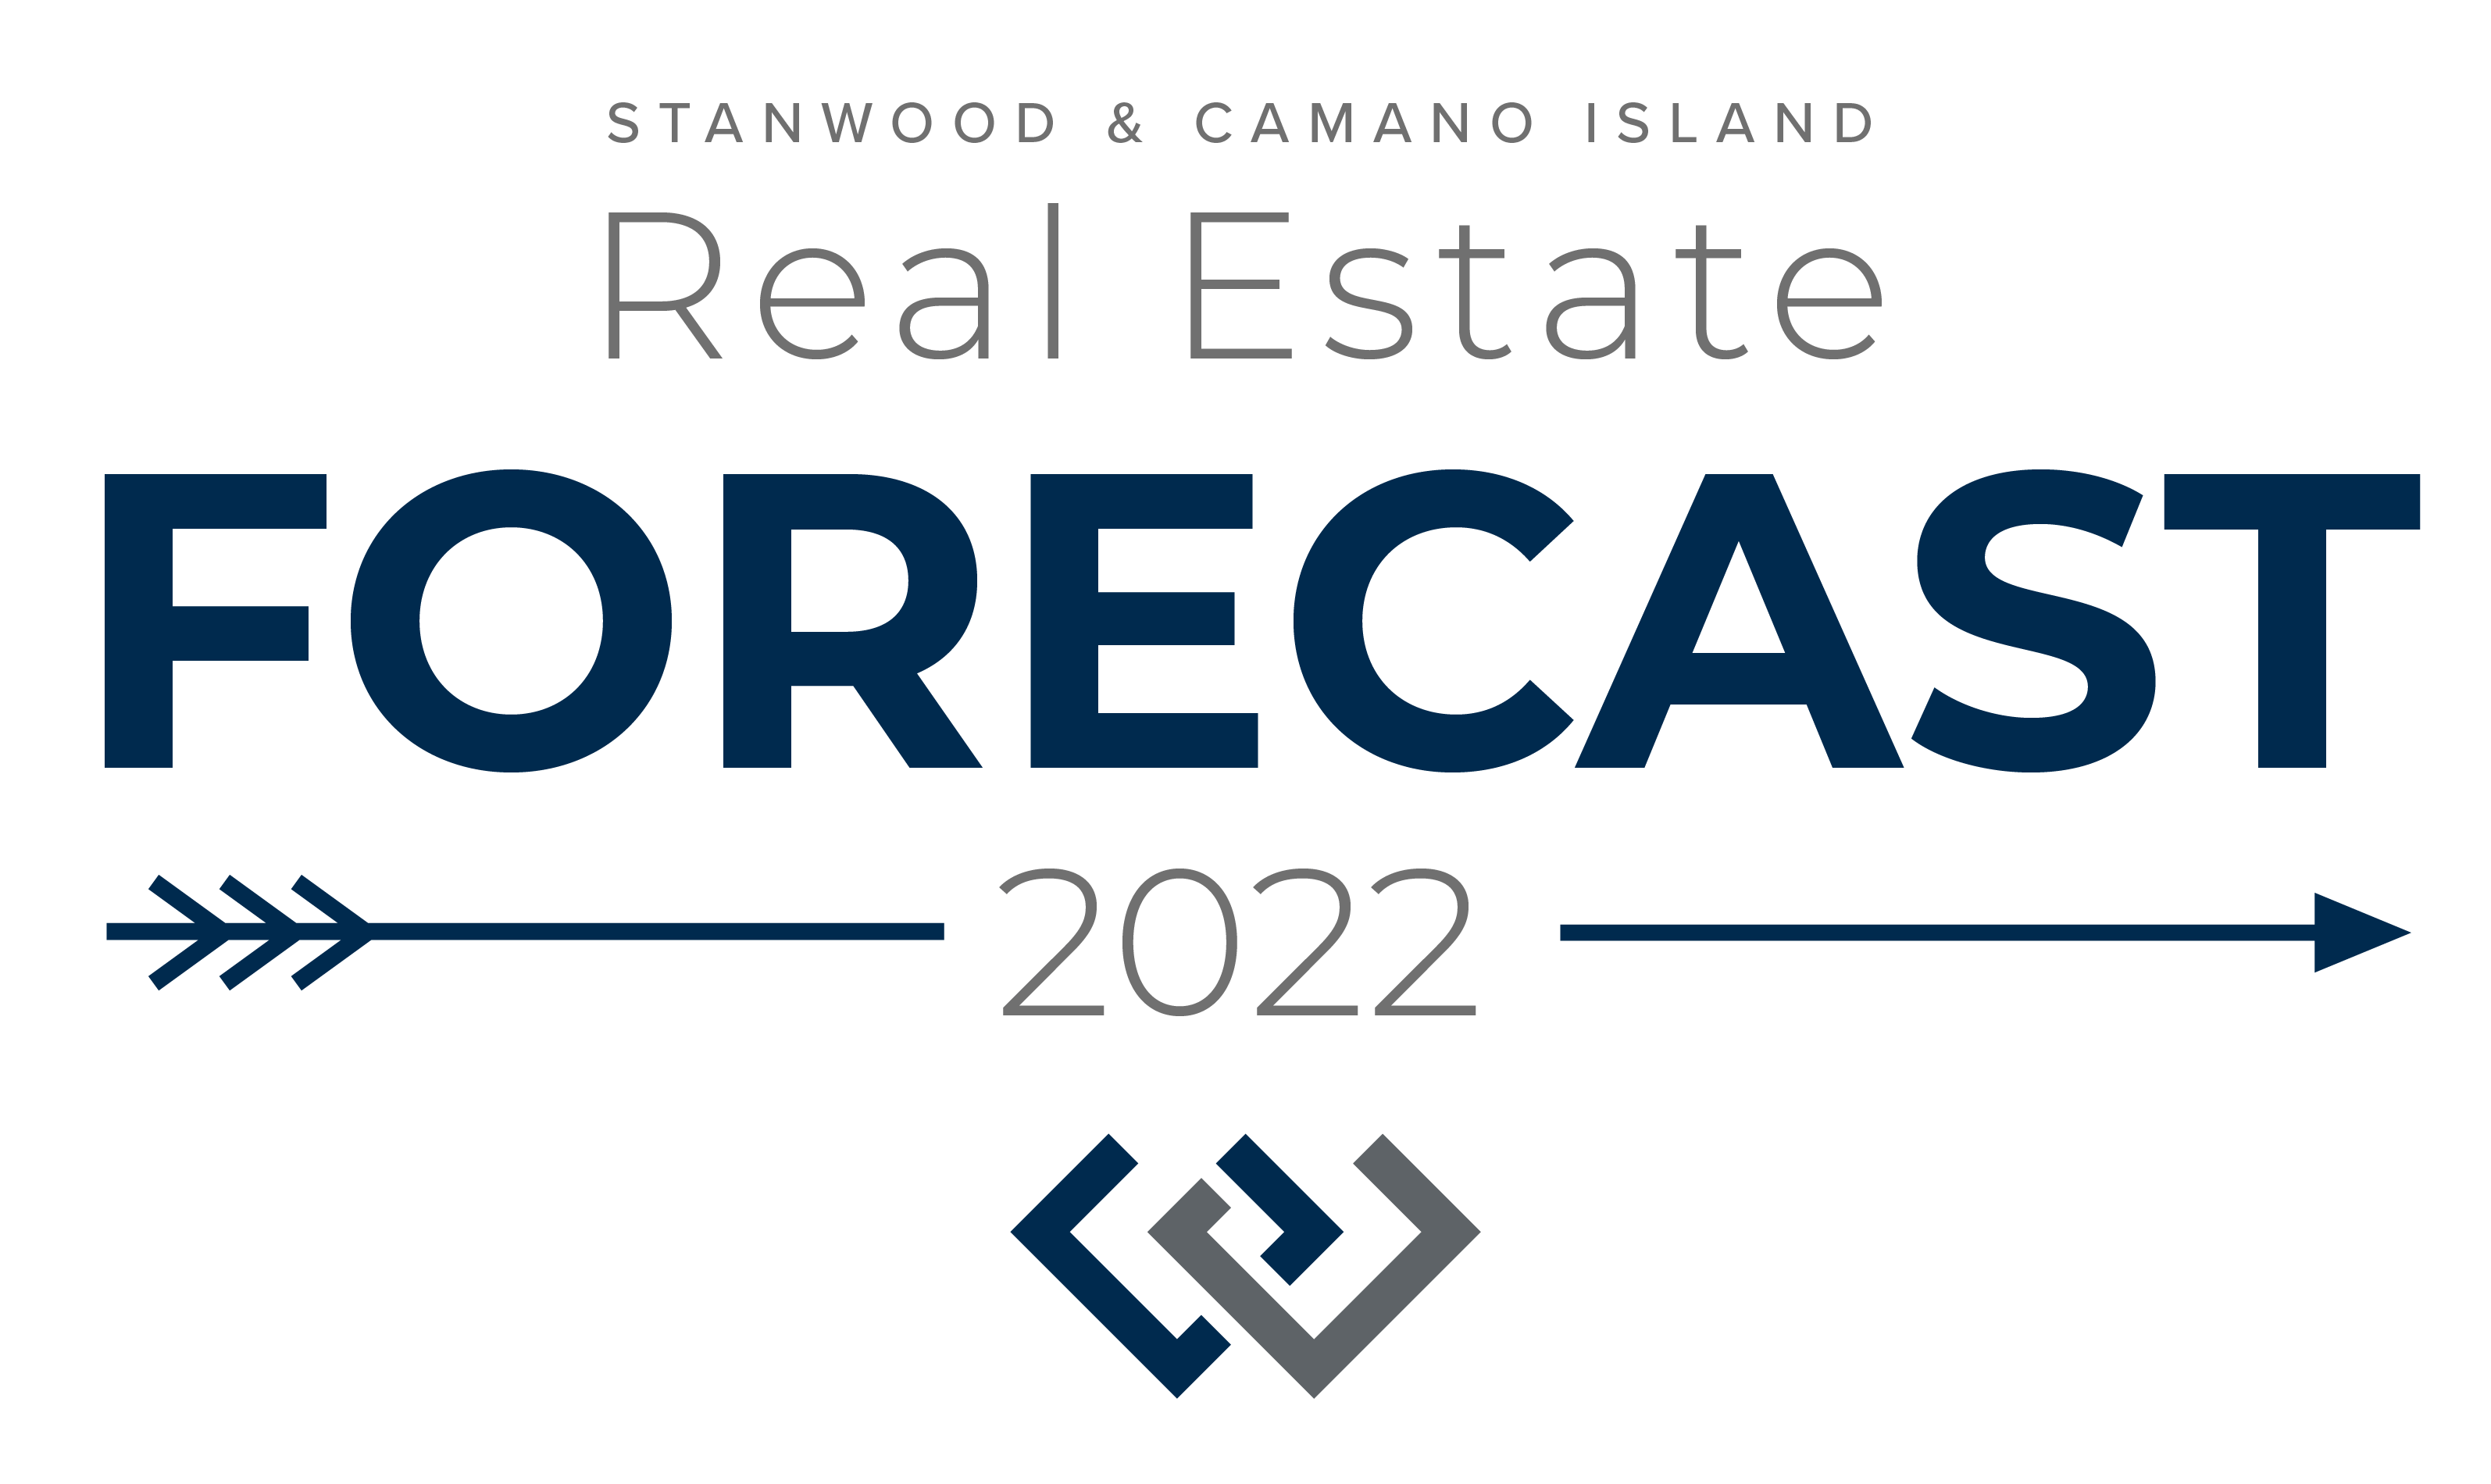 Stanwood & Camano Island Real Estate Forecast 2022